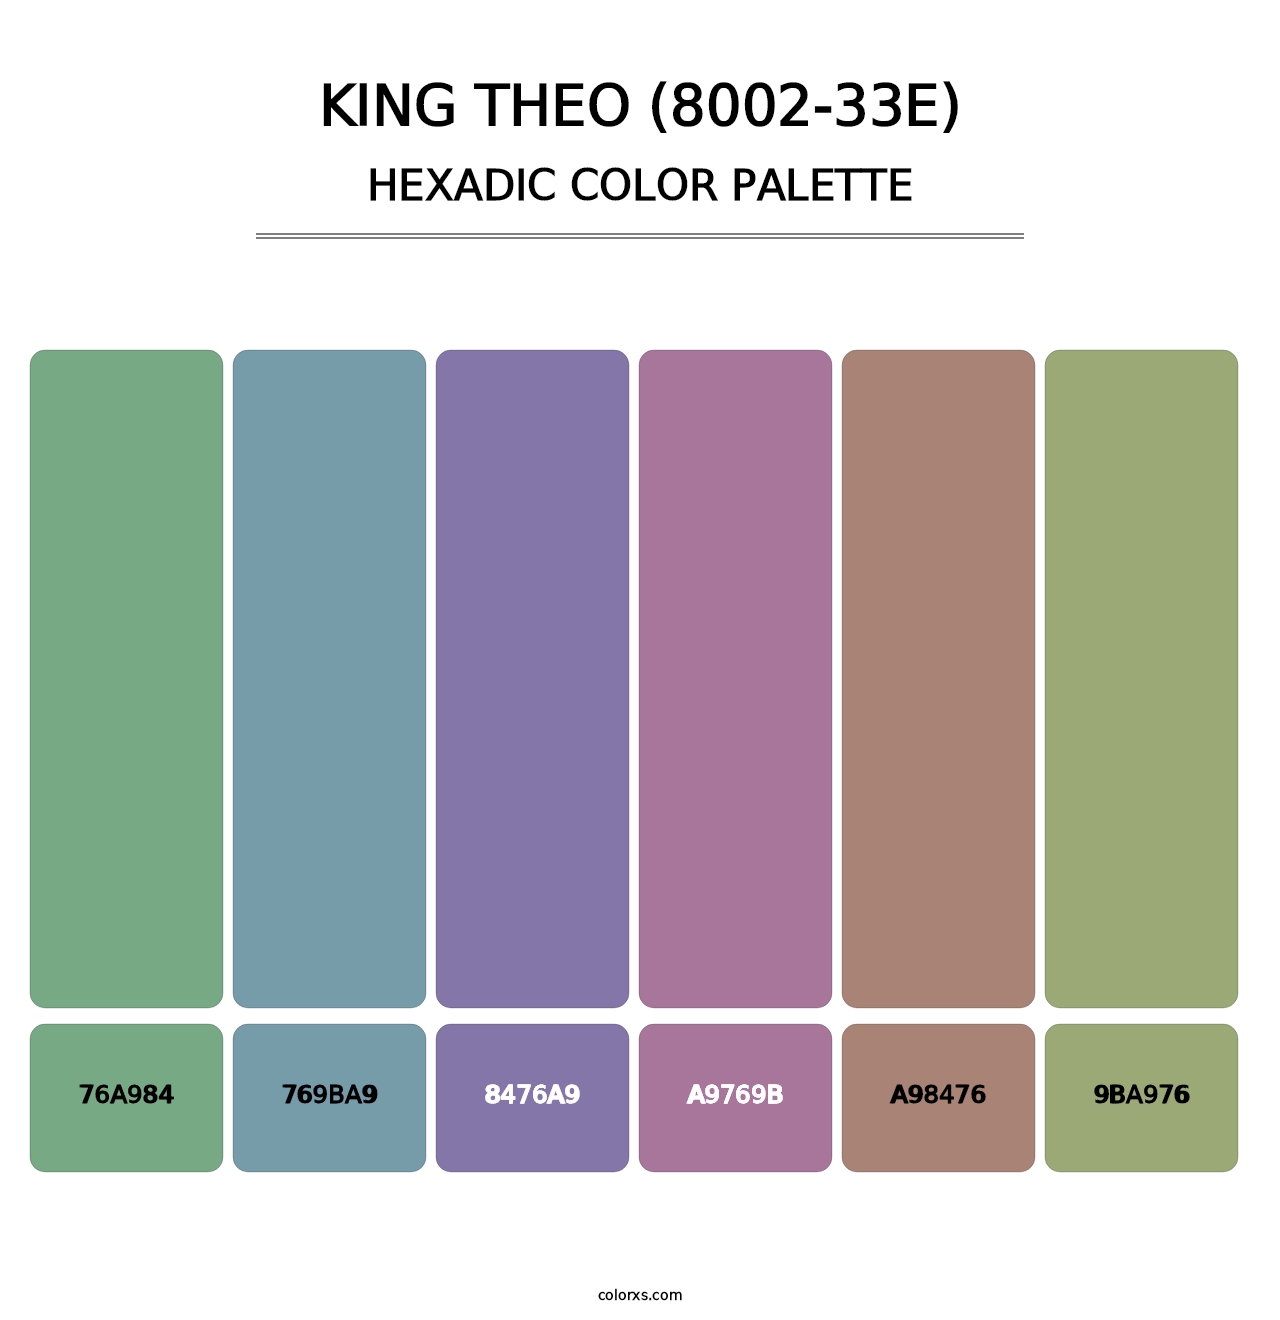 King Theo (8002-33E) - Hexadic Color Palette